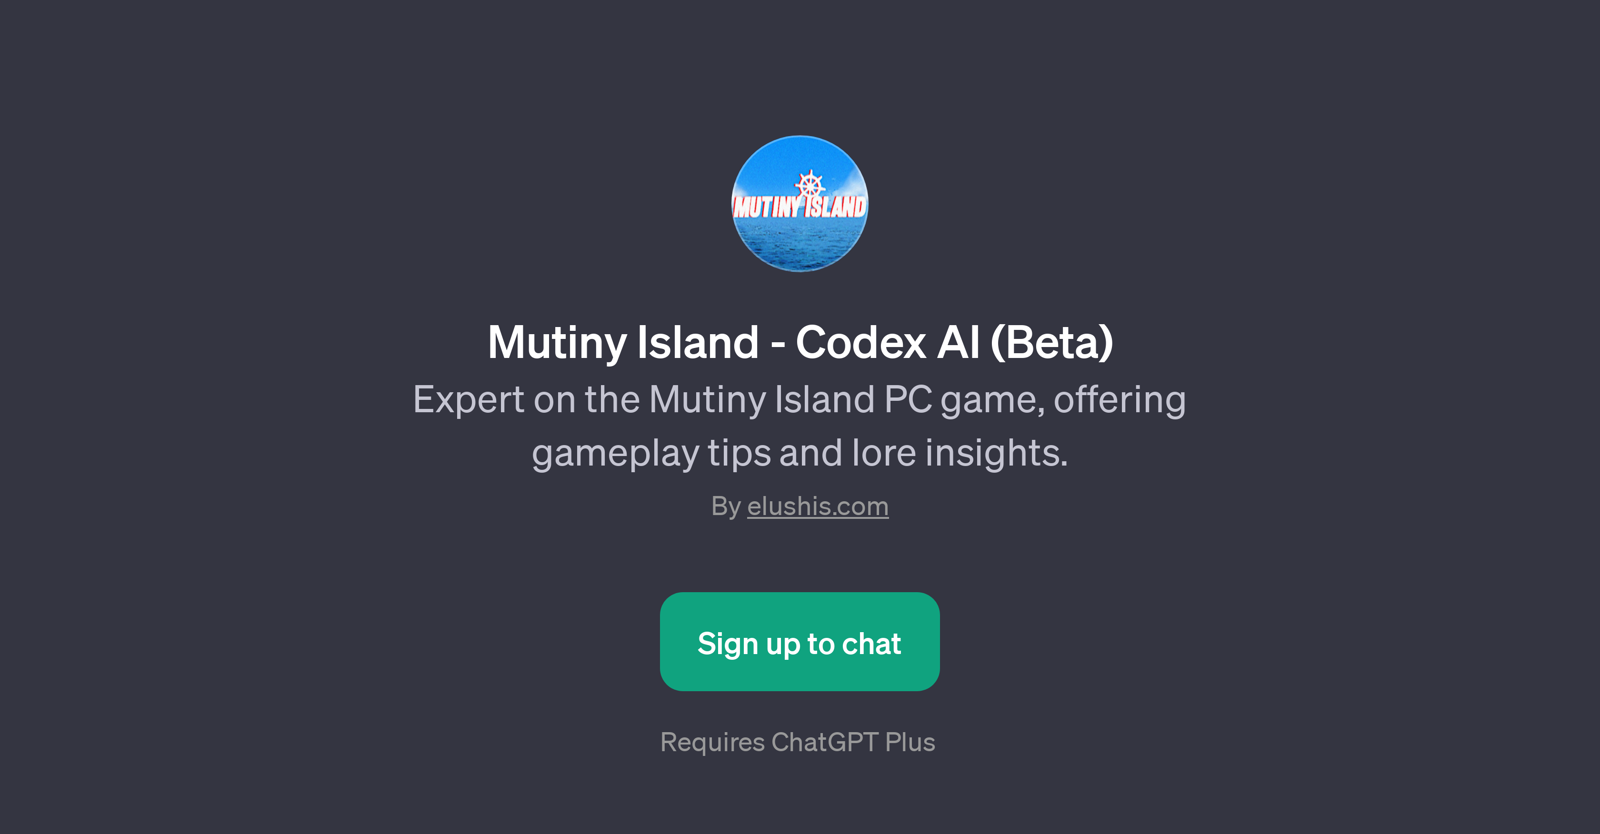 Mutiny Island - Codex AI (Beta) website